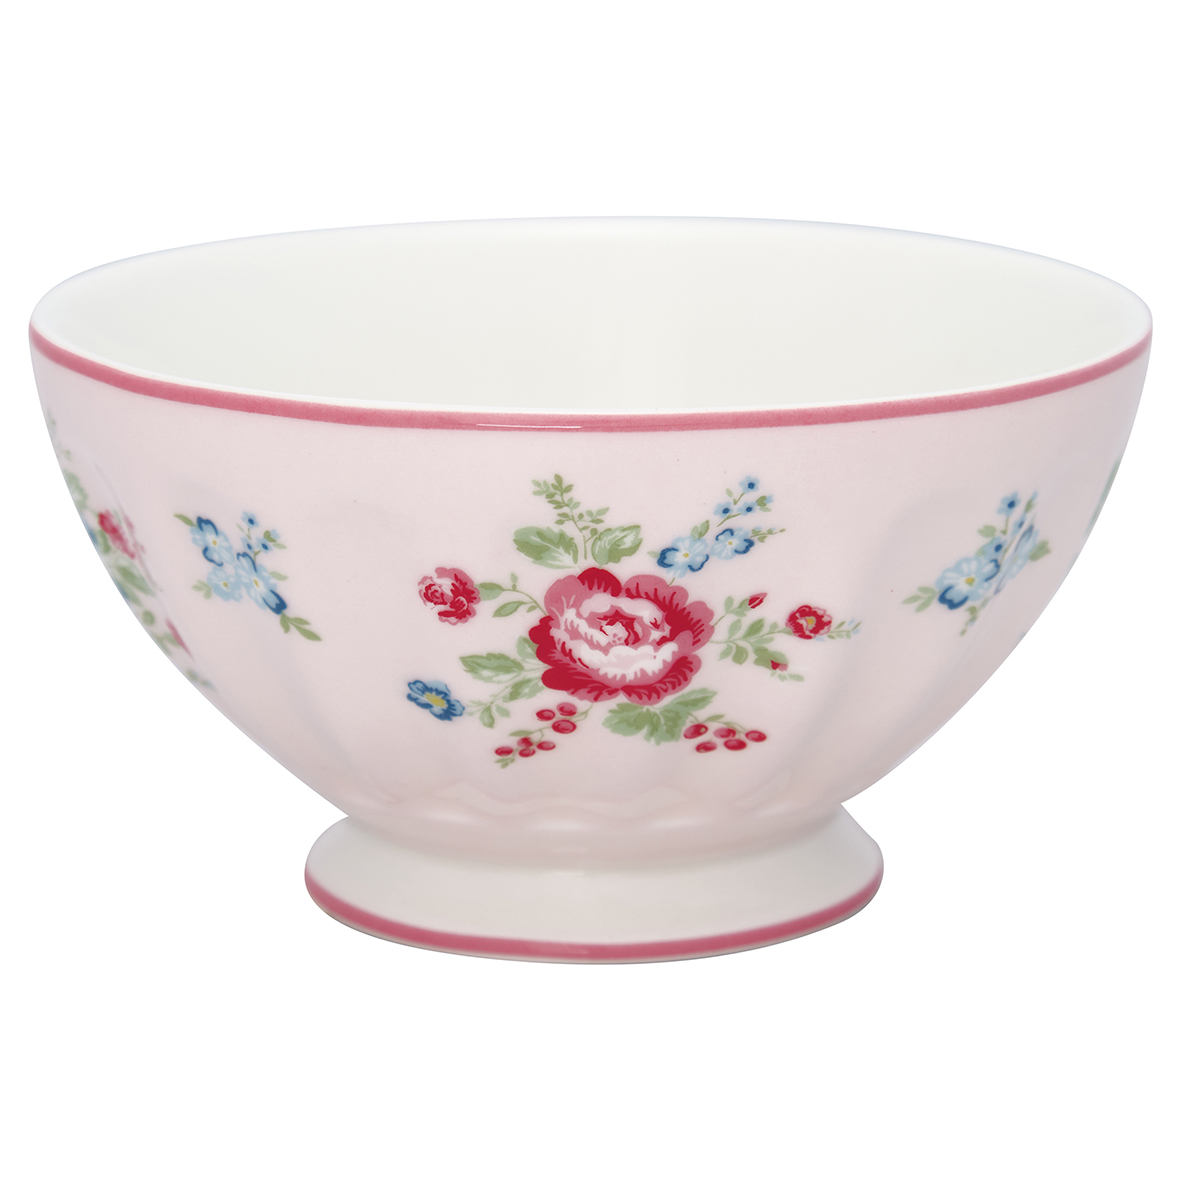 Greengate Schüssel Roberta pale pink French bowl xlarge